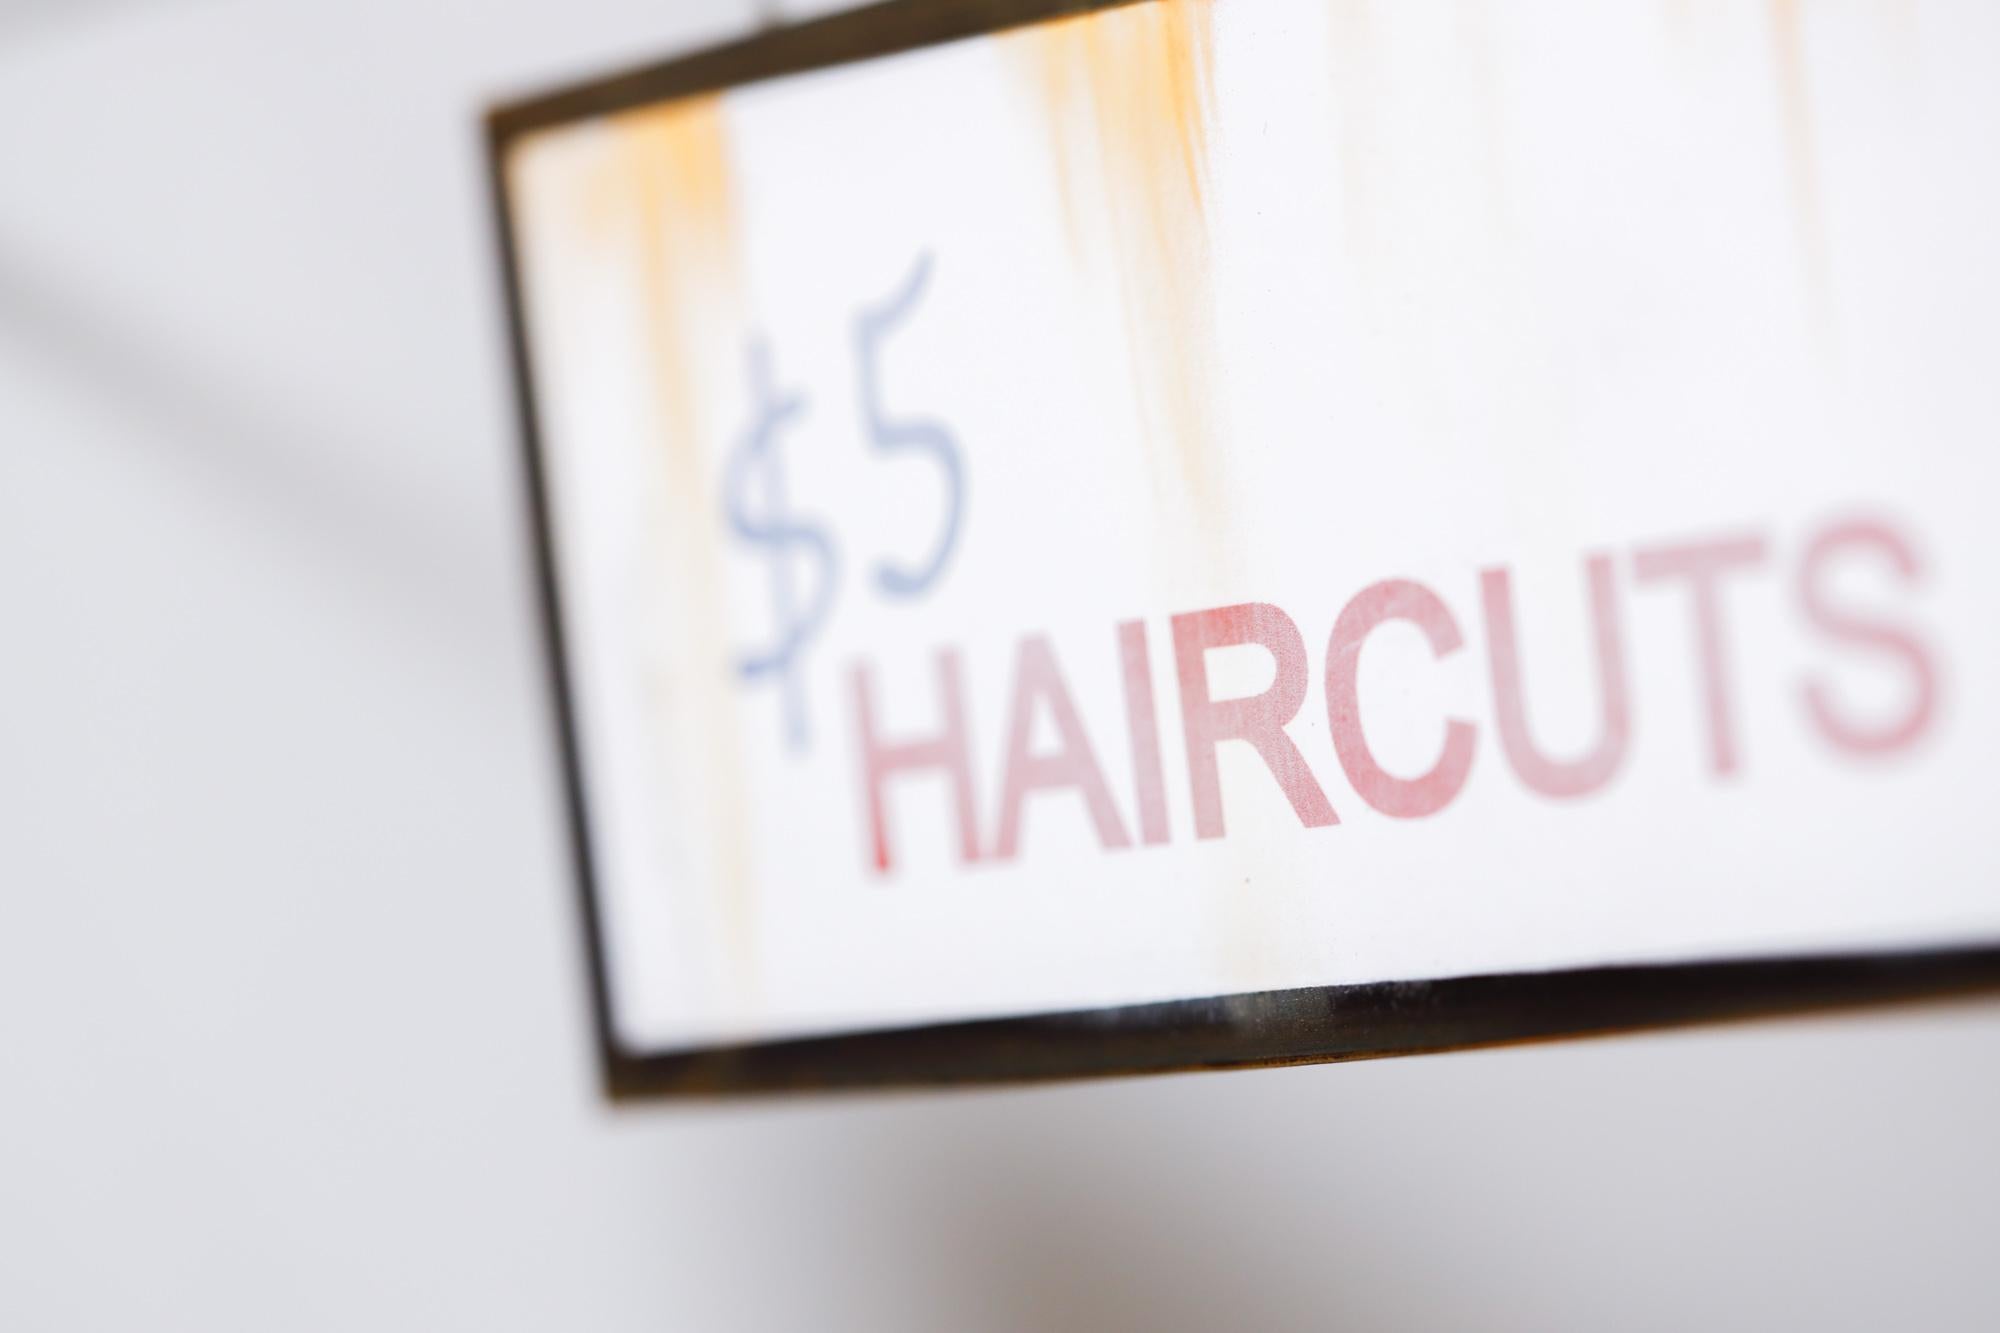 $5 Haircut - Sculpture by Drew Leshko